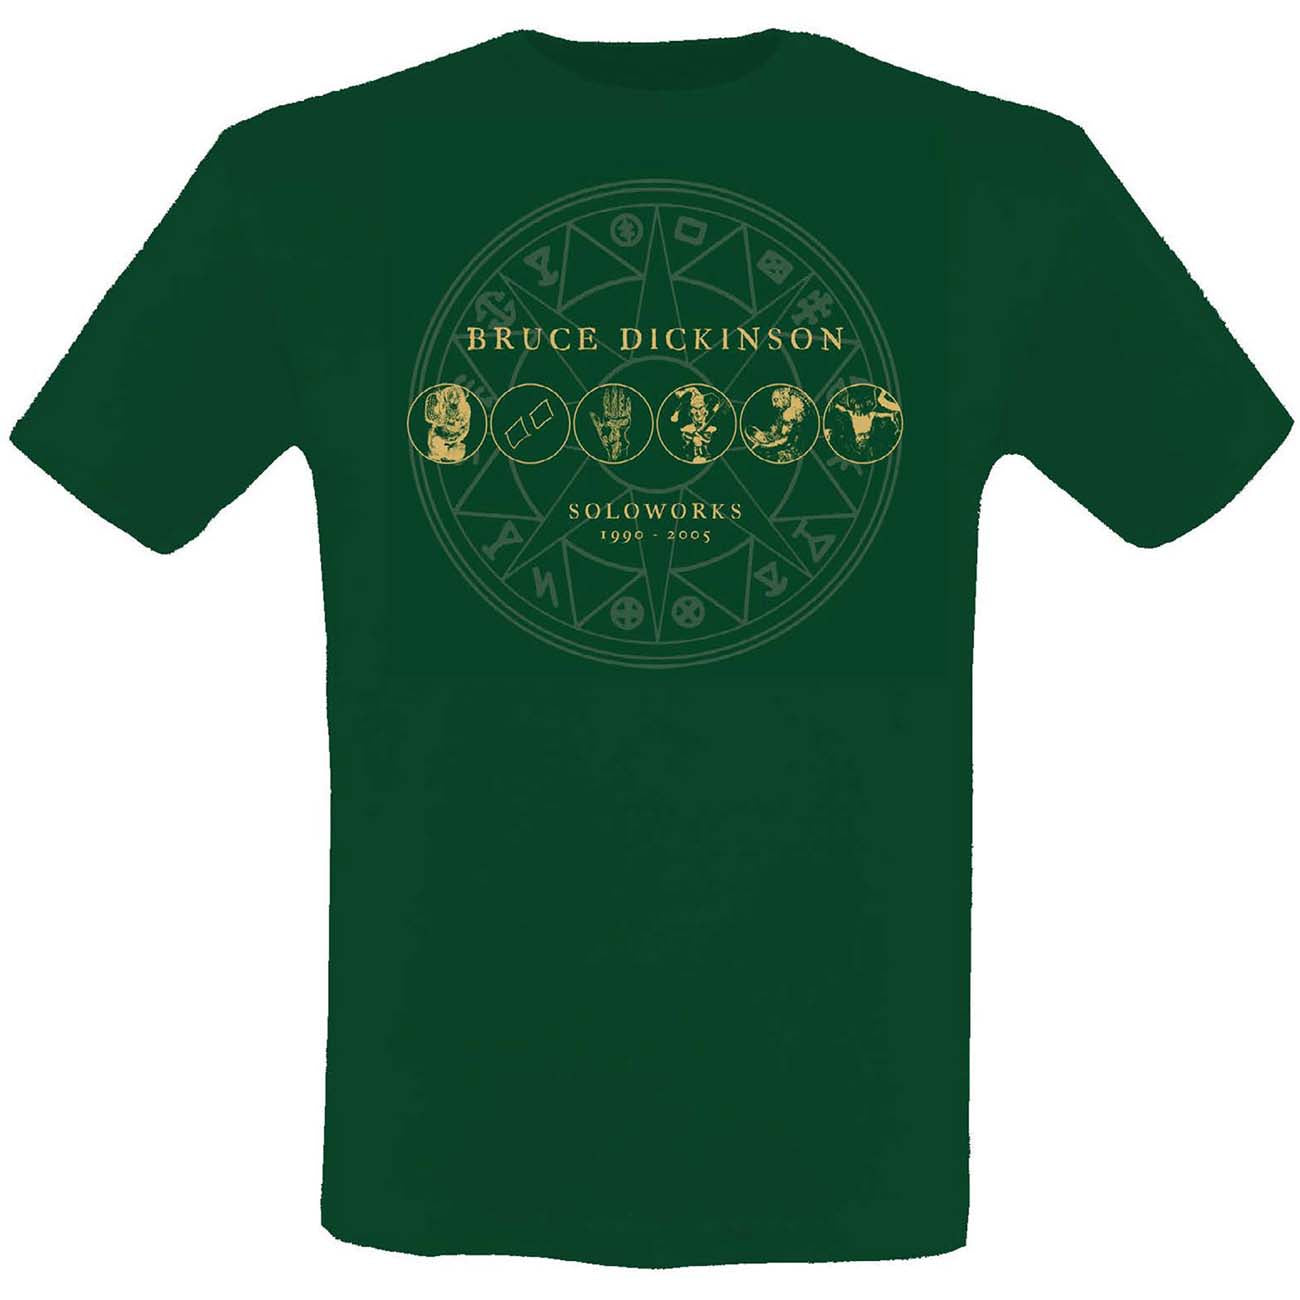 Bruce Dickinson Unisex T-Shirt: Bruce Dickinson Soloworks